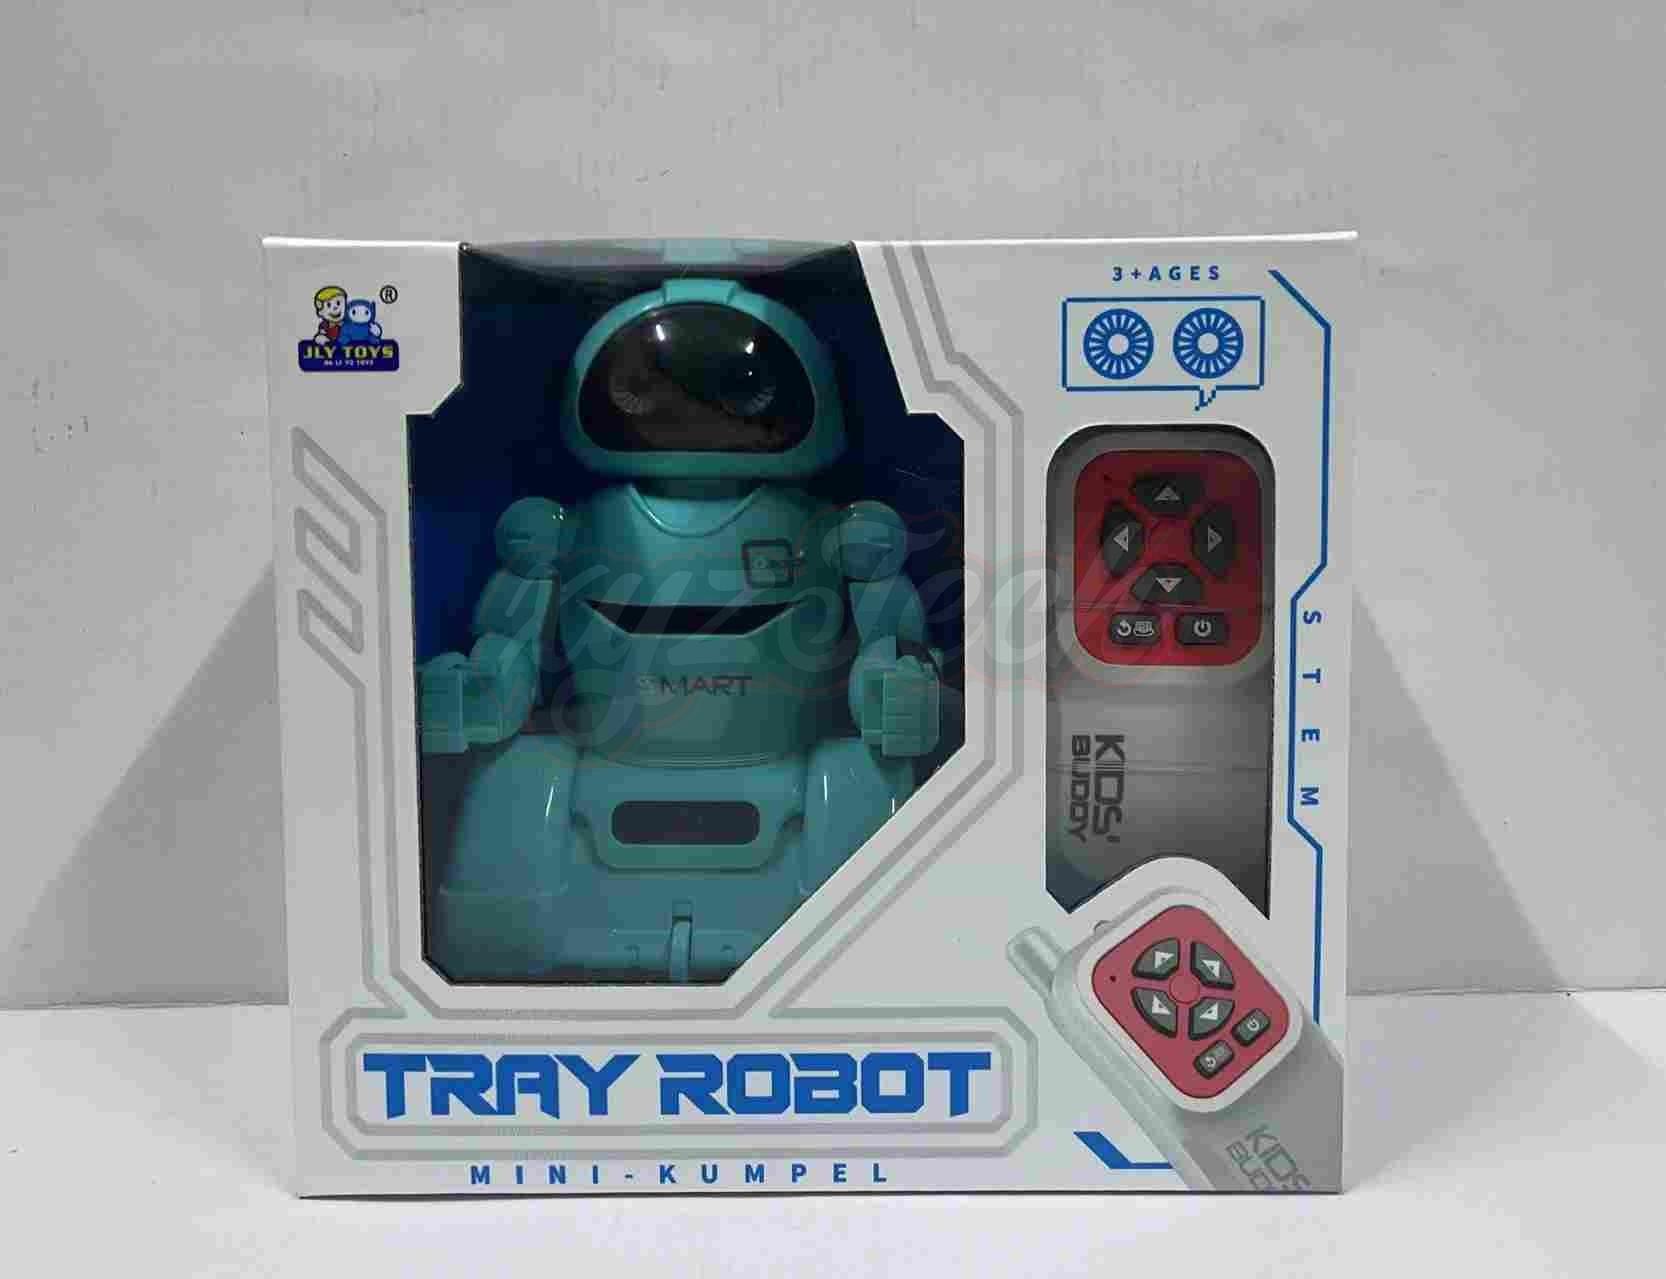 Tray robot